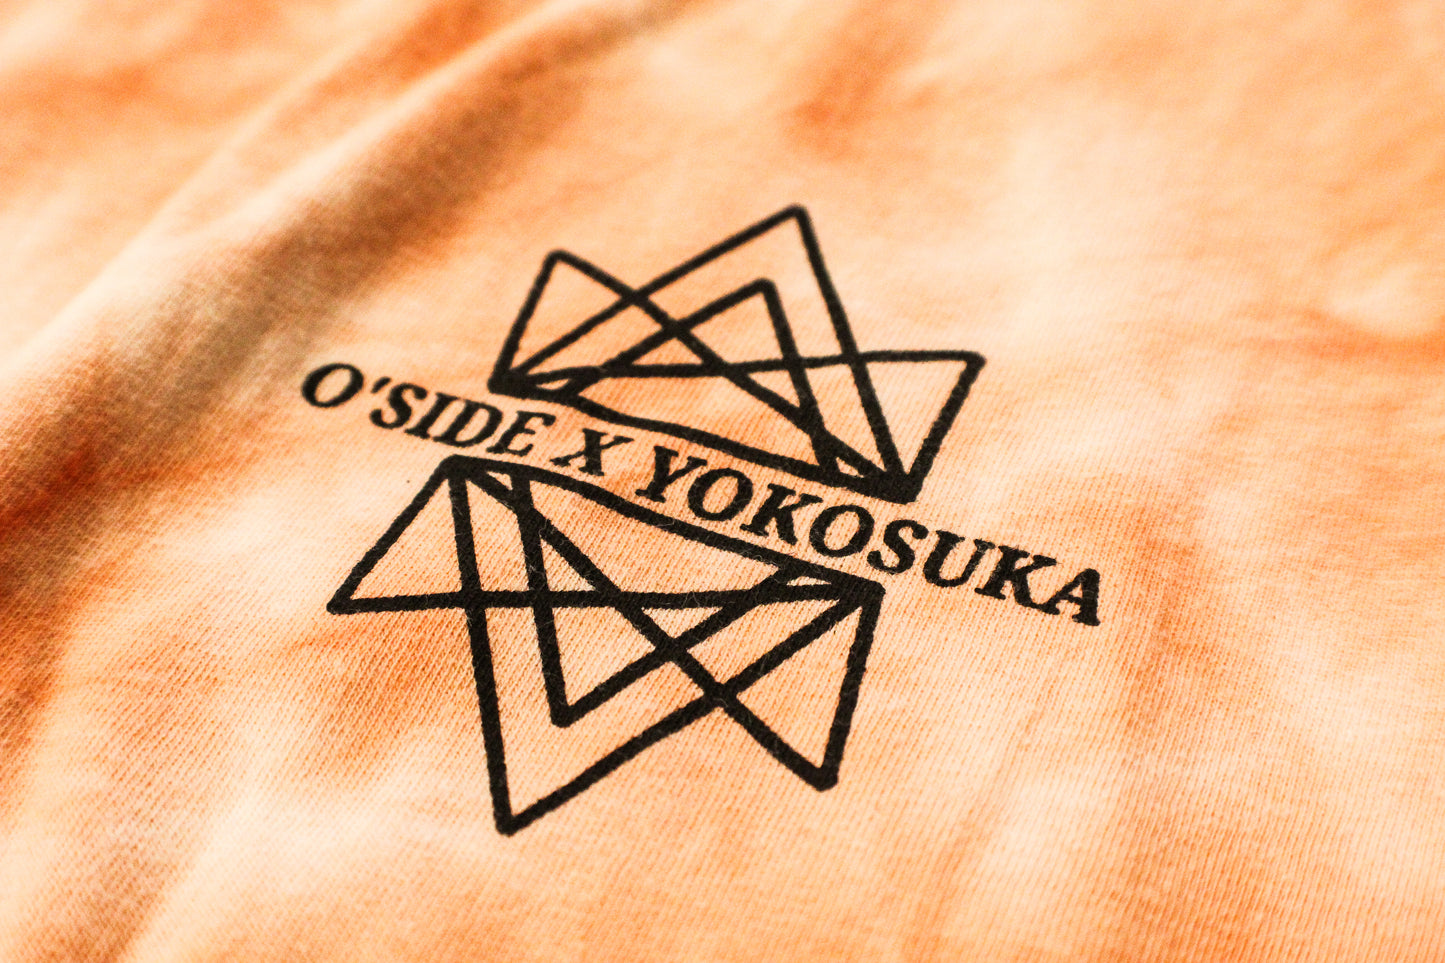 Limited O'side x Yokosuka Shibori Dye Women's Shirt - Small